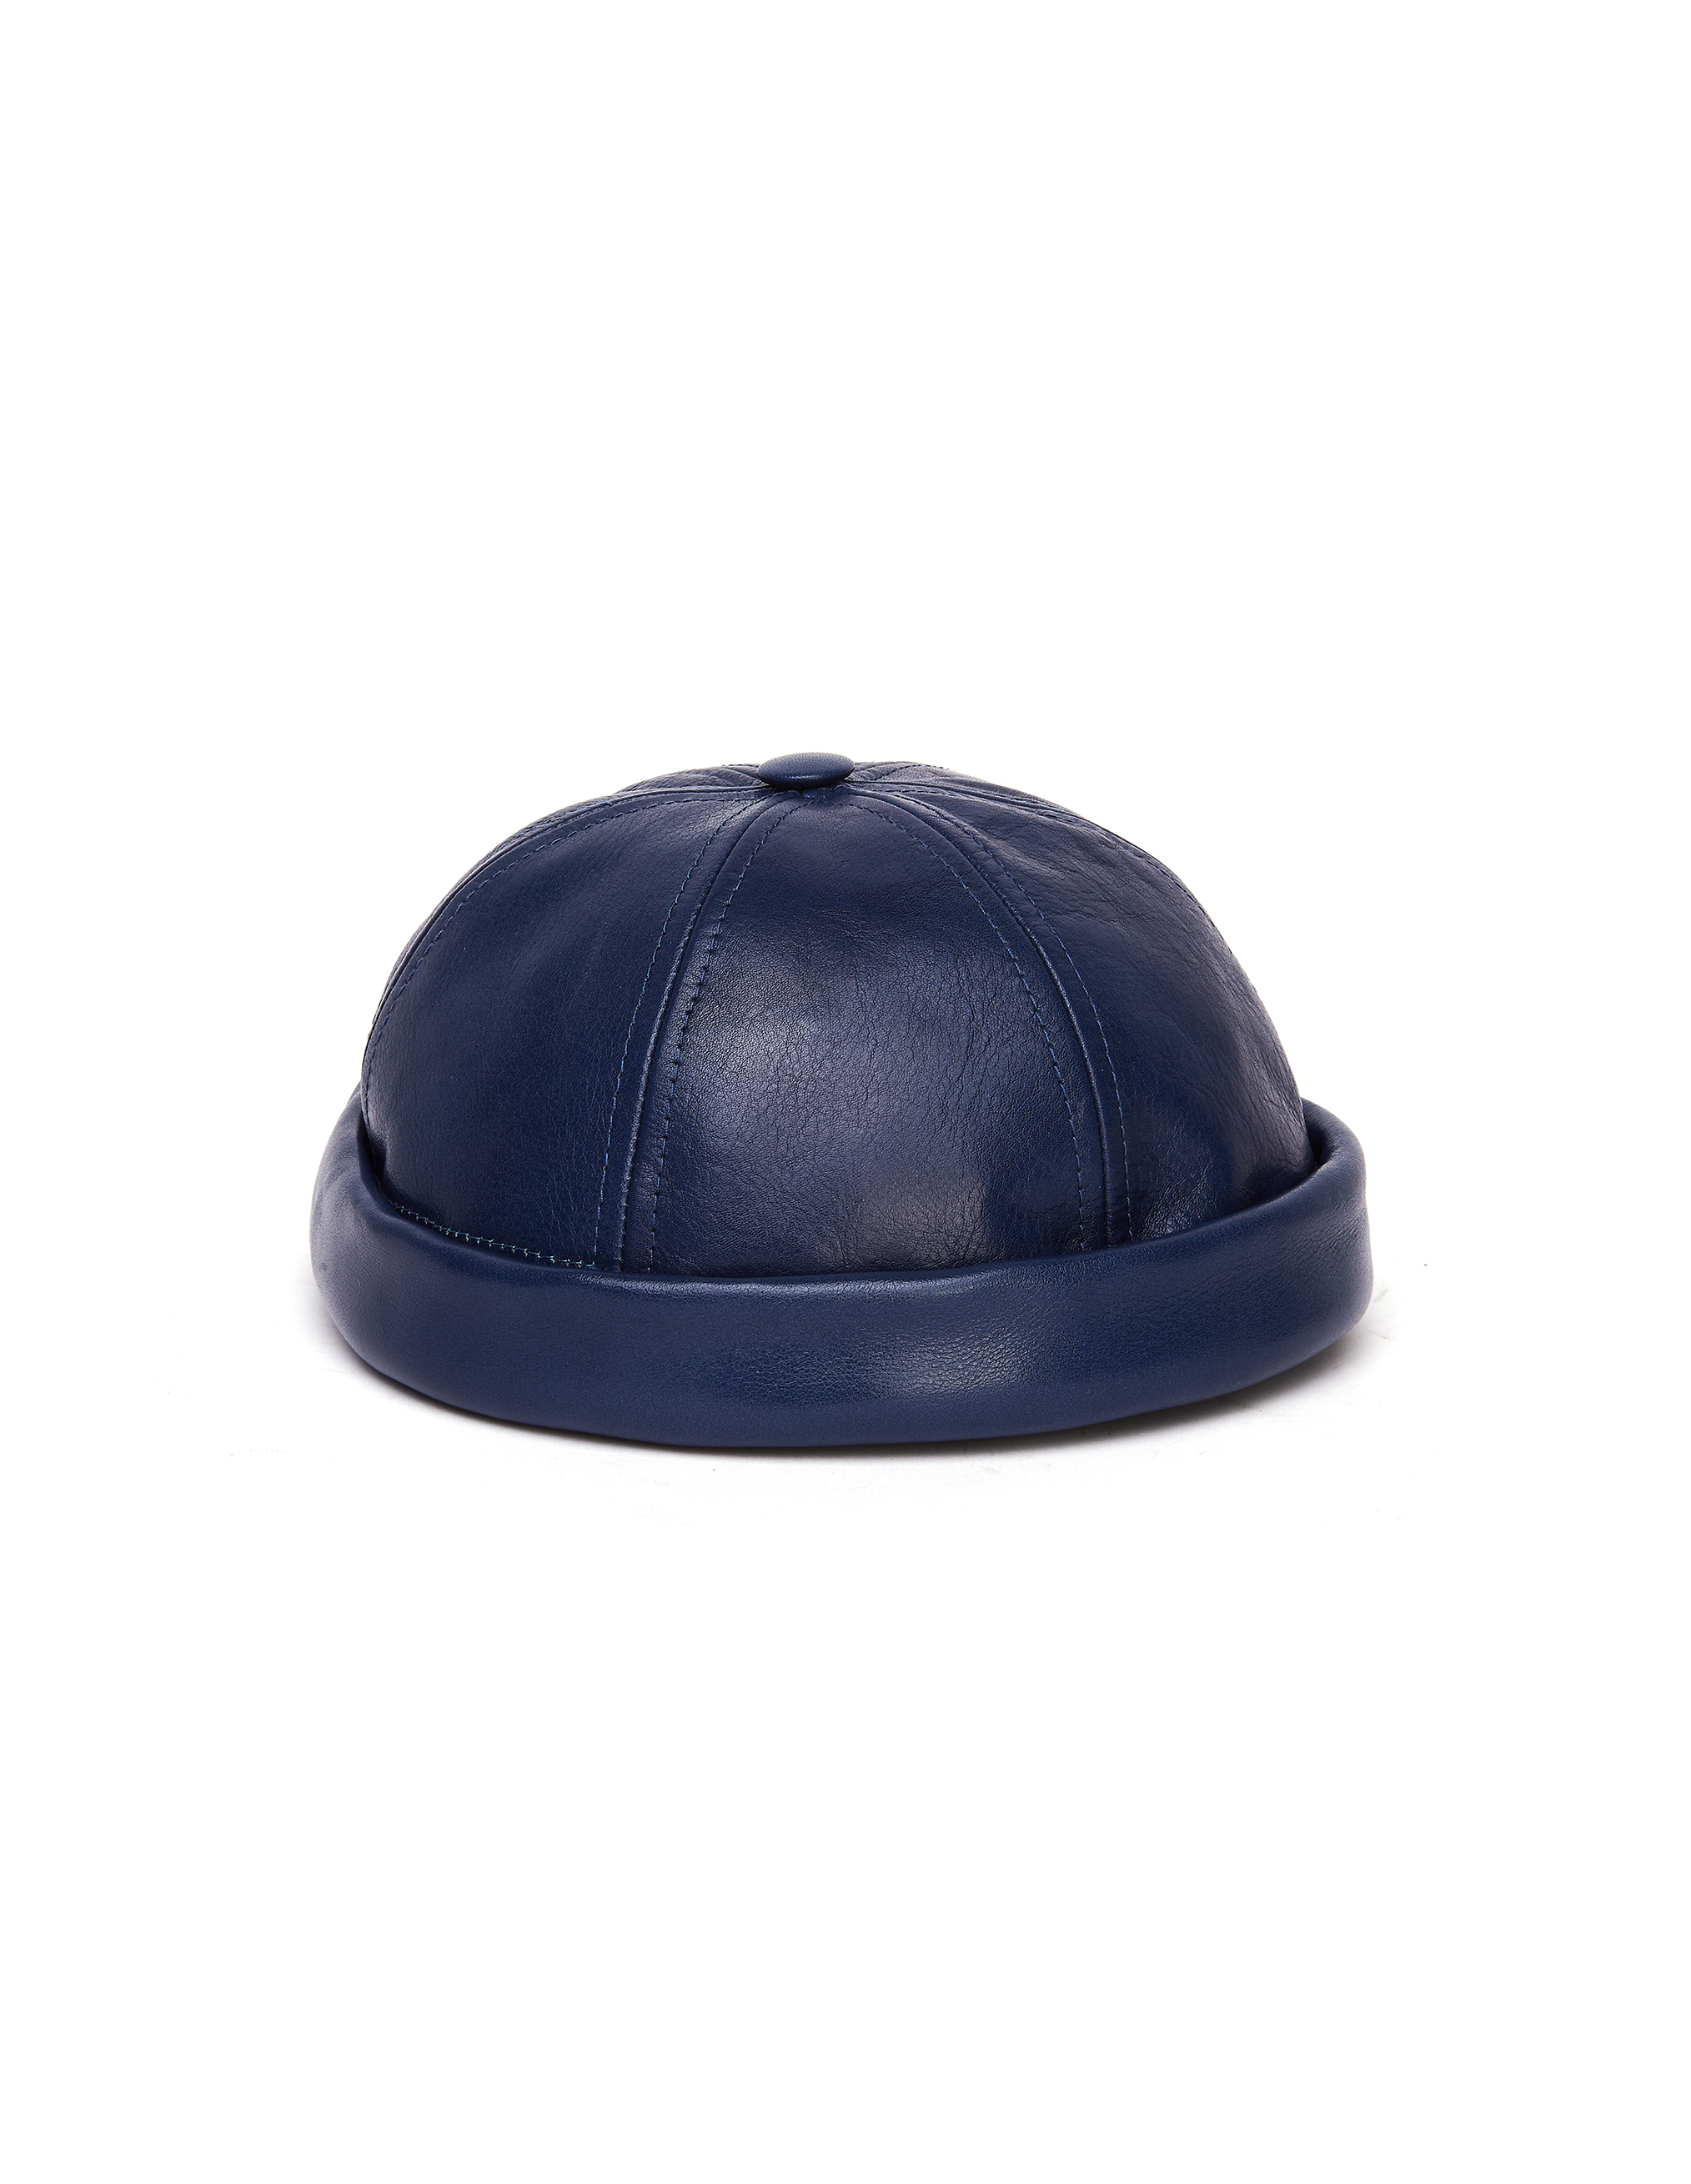 Синяя кожаная шапка Beton Cire Comme des Garcons CdG WF-K601-051-3, размер One Size - фото 1